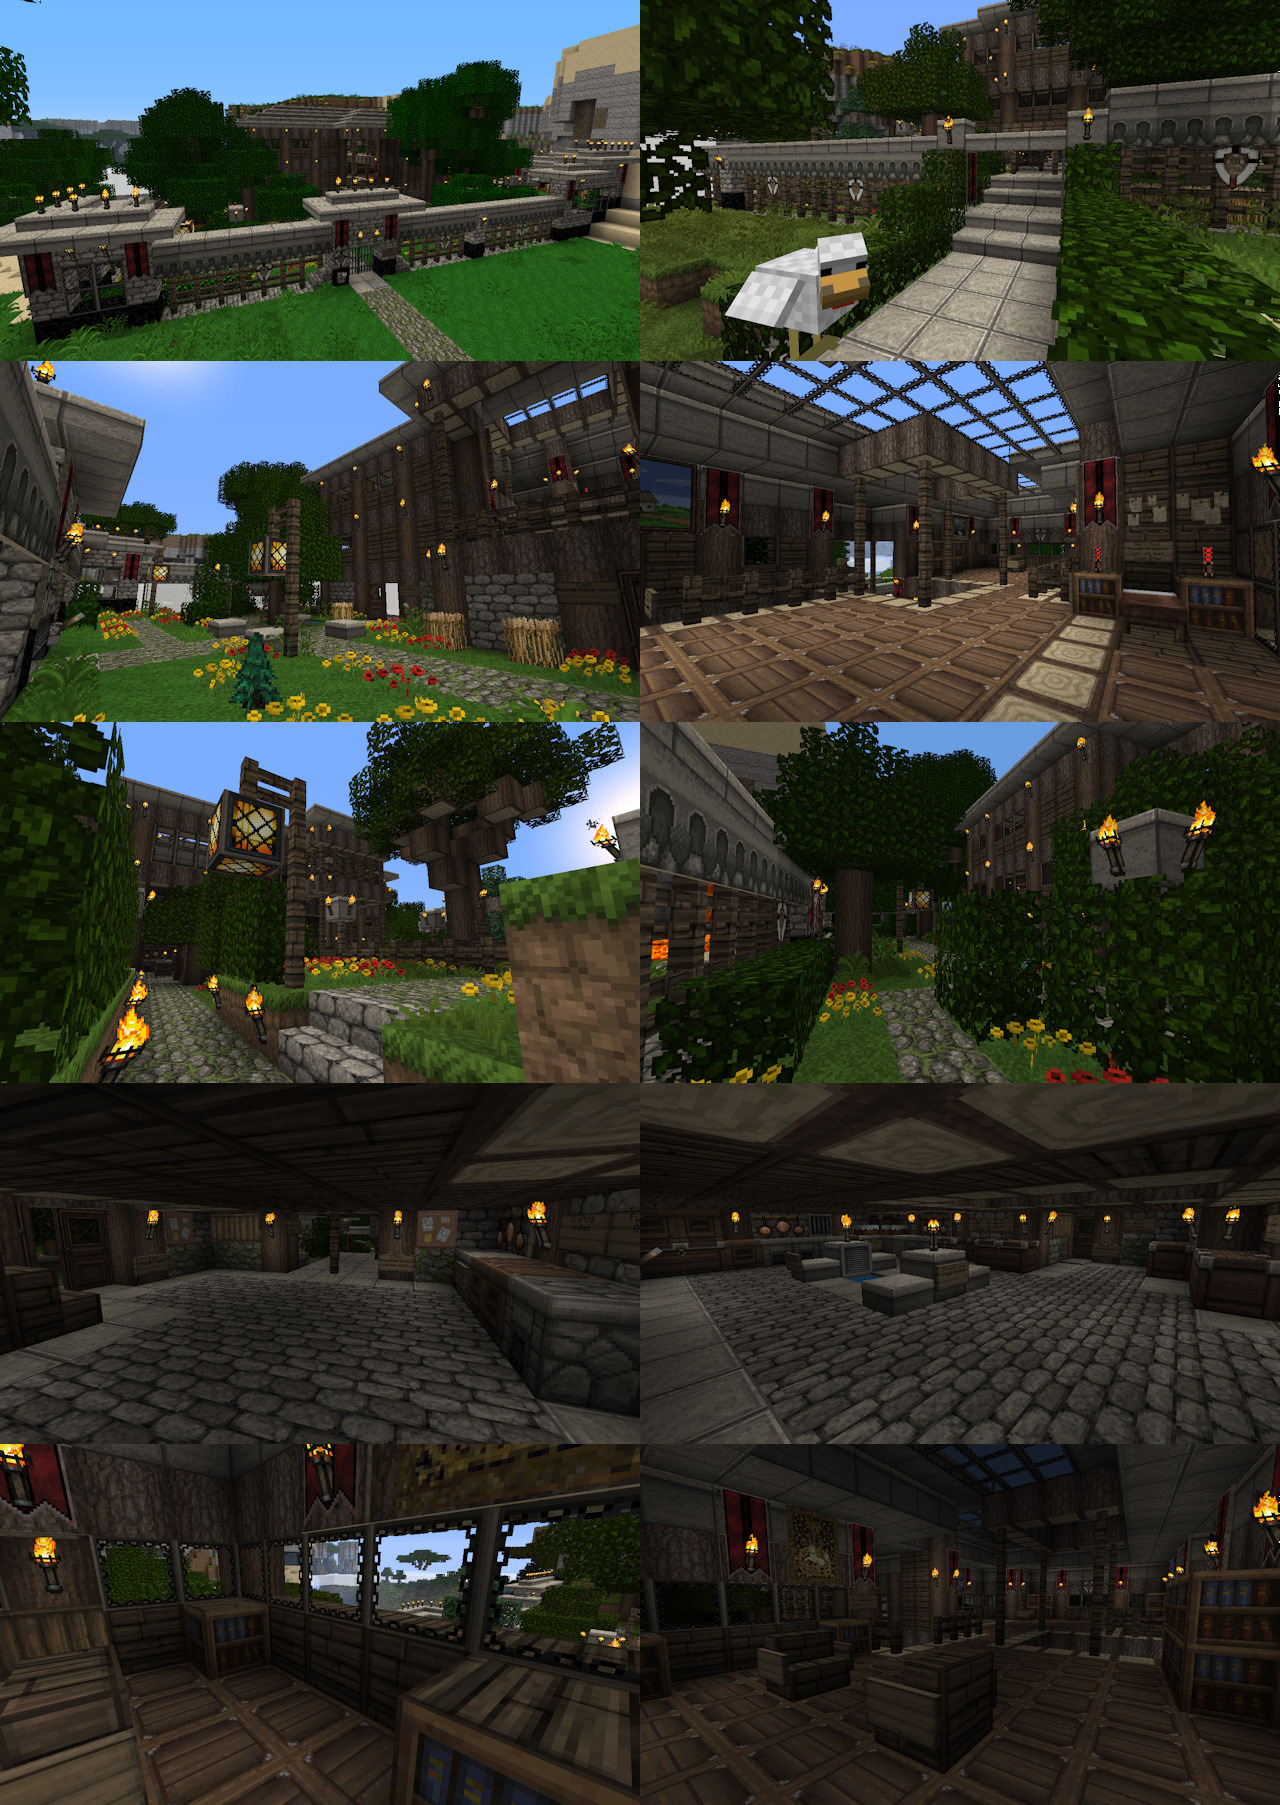 Mansion With Lights 2.0 addon - Minecraft - ModDB